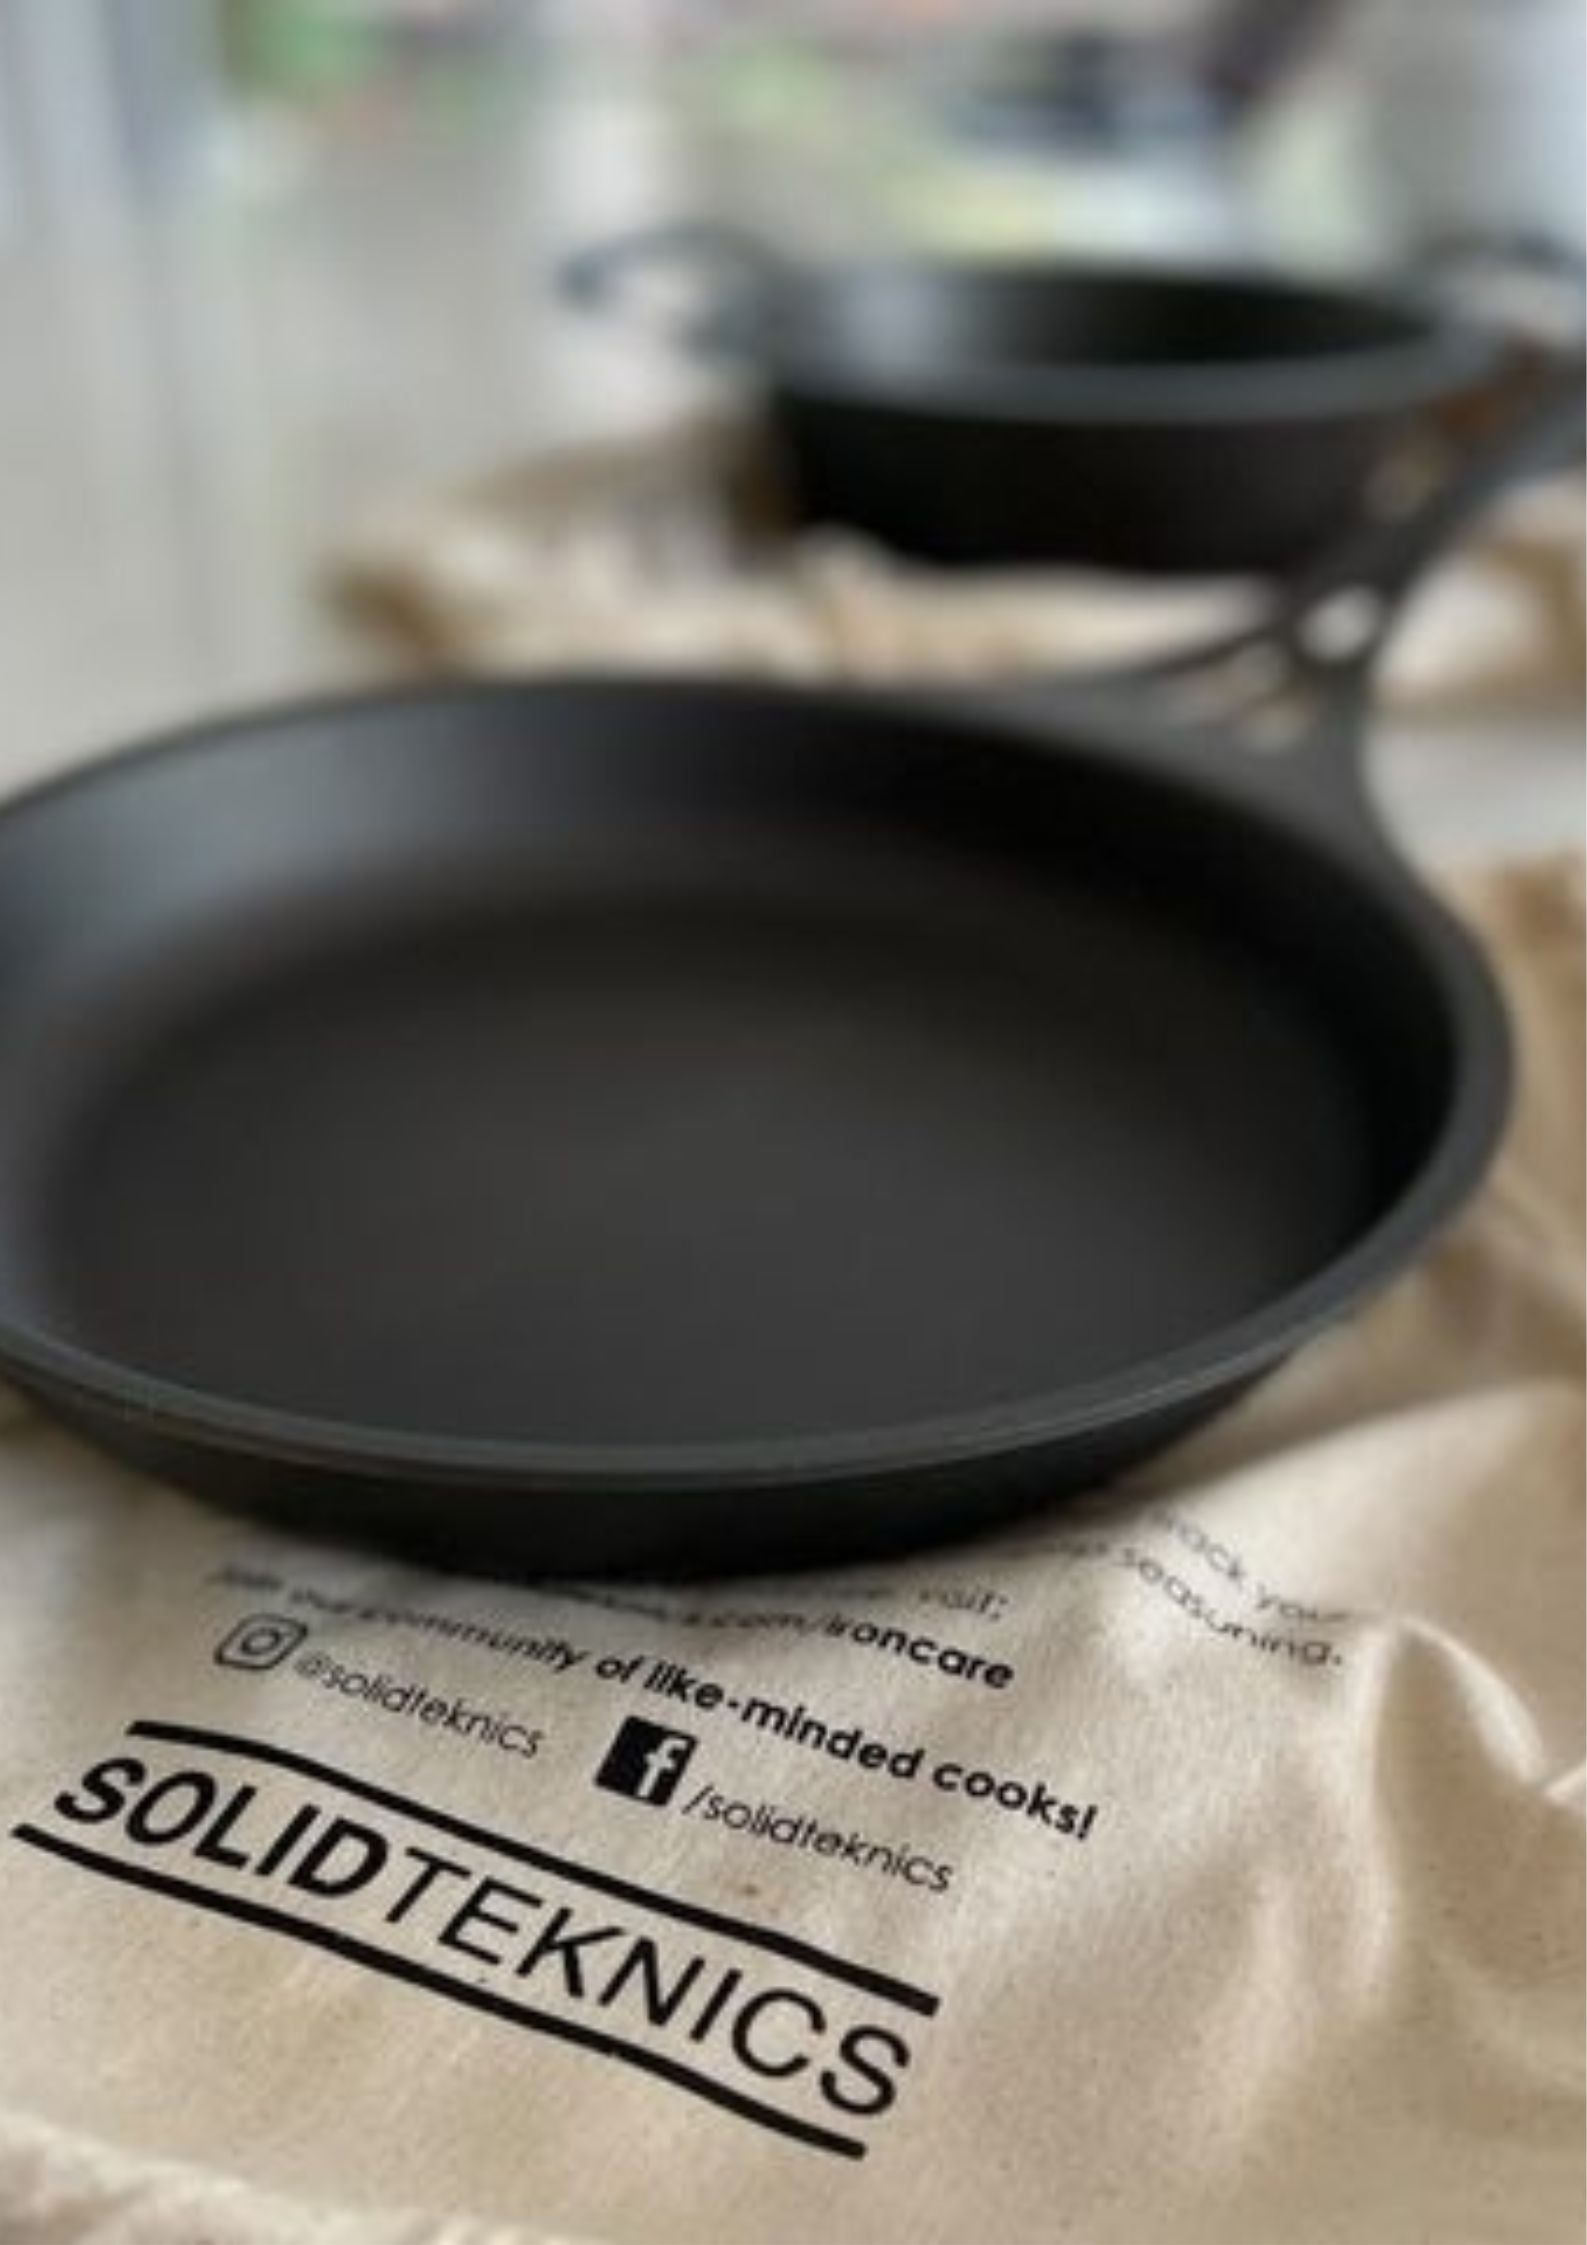 solidteknics cookware